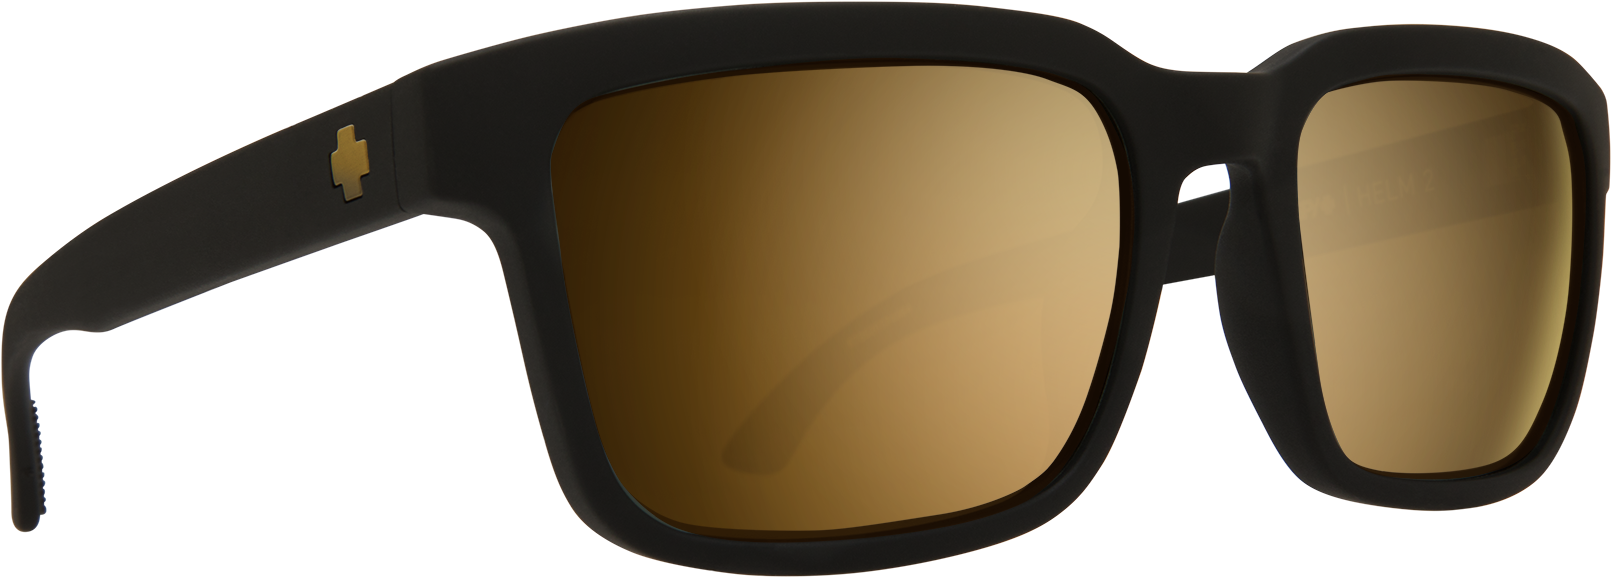 Helm 2 - Sunglasses (2000x1200), Png Download